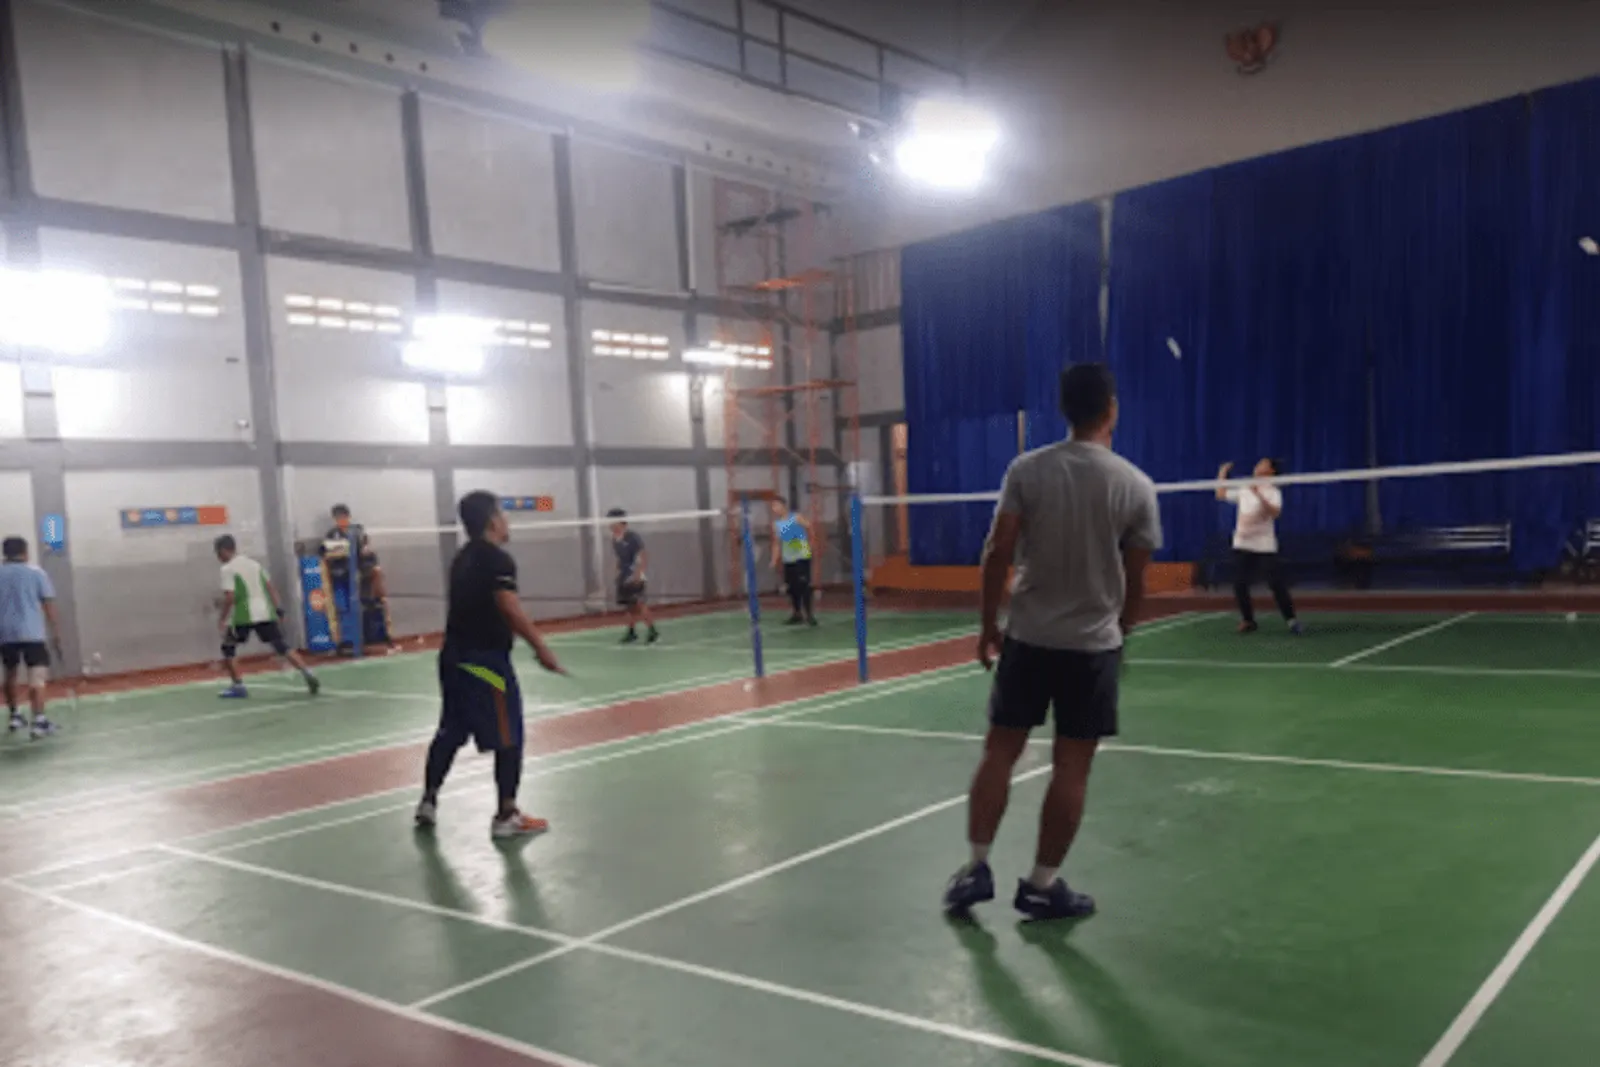 Lokasi Strategis, Inilah 9 Lapangan Badminton di Jakarta Selatan